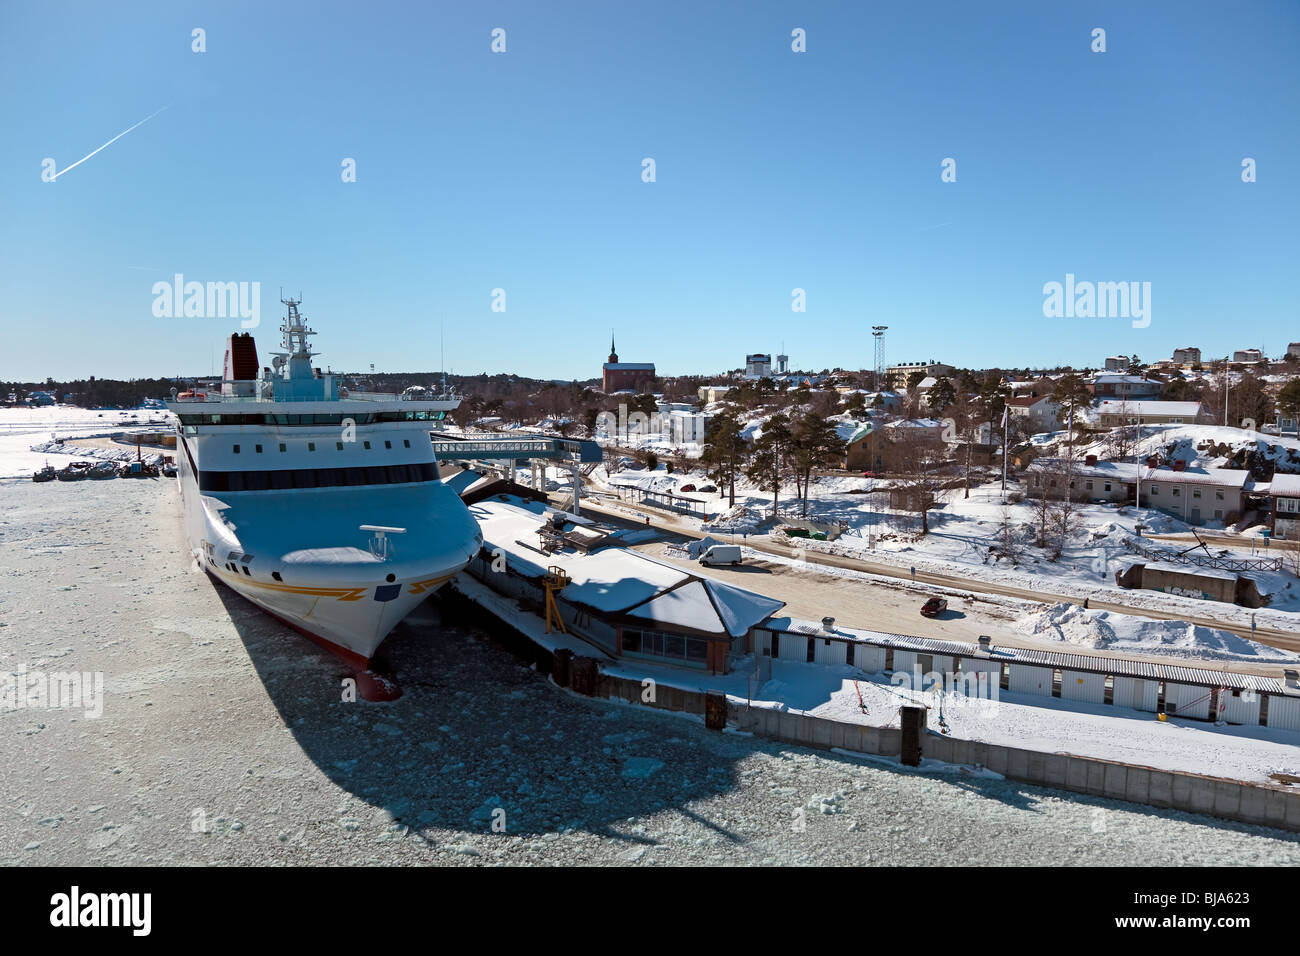 Port of nynäshamn hi-res stock photography and images - Alamy